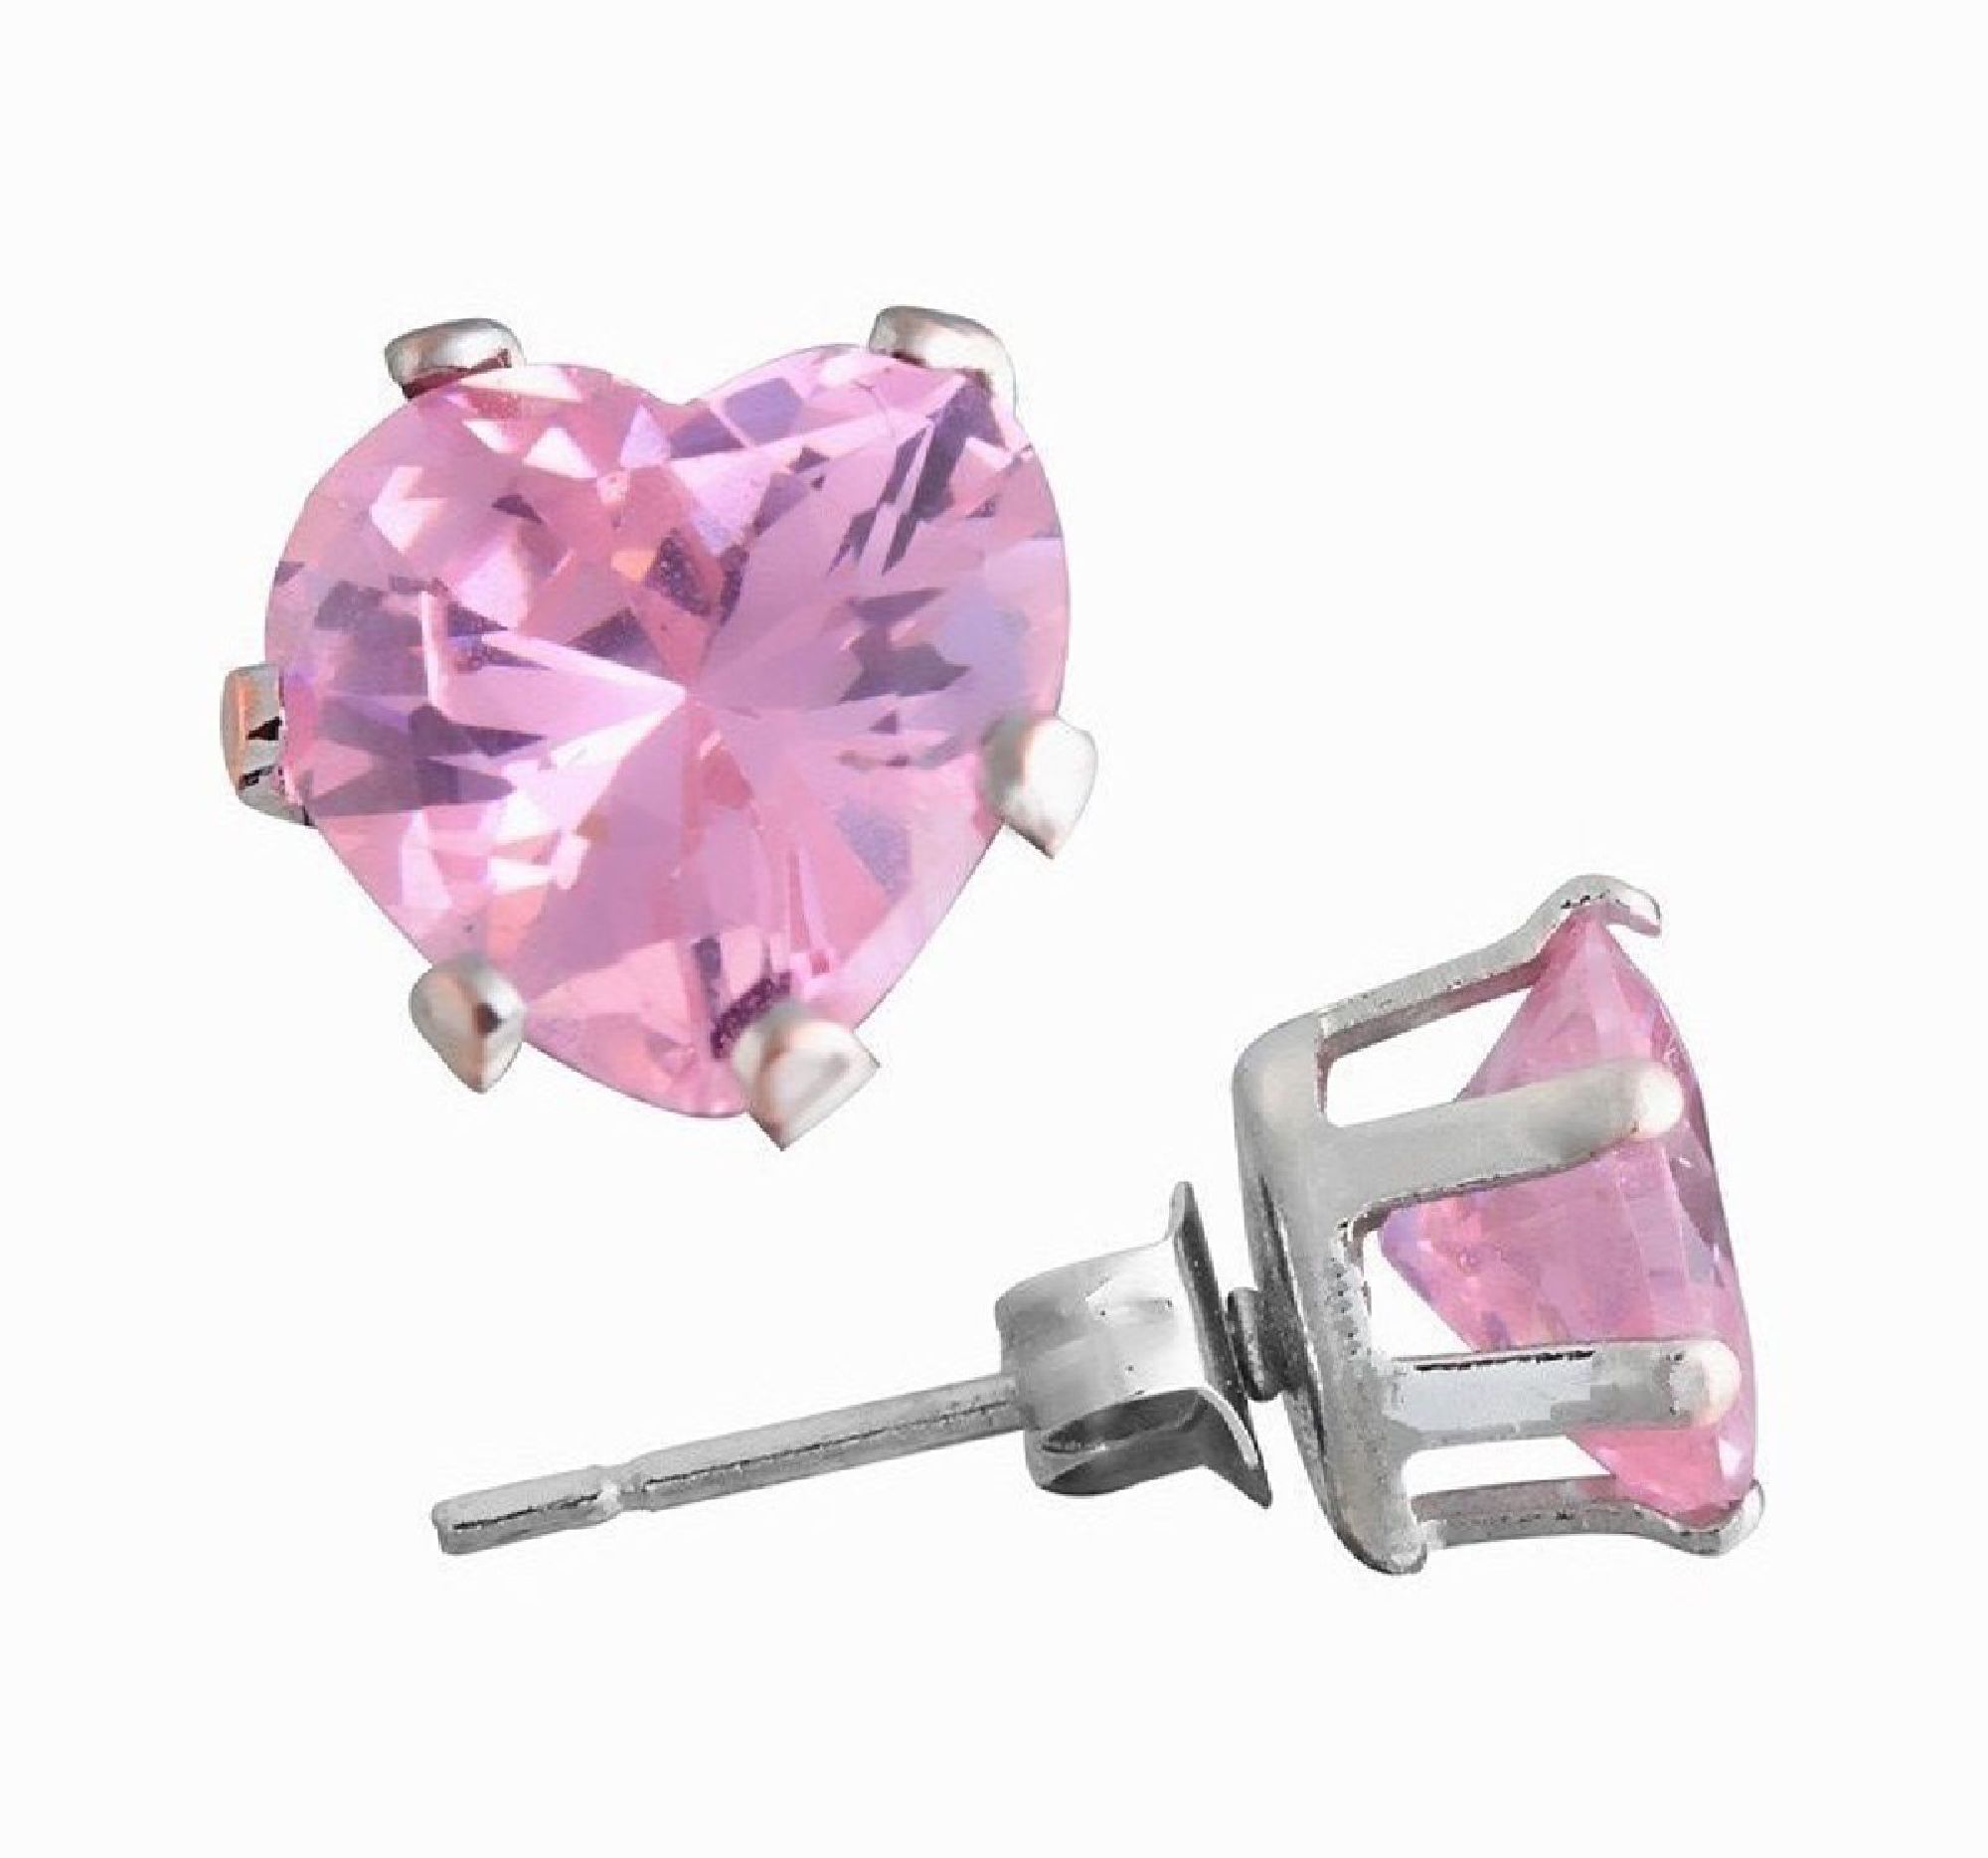 6 Carat Heart Shape Pink Diamond manmade Stud Earrings for Woman in Sterling Silver Designed in France